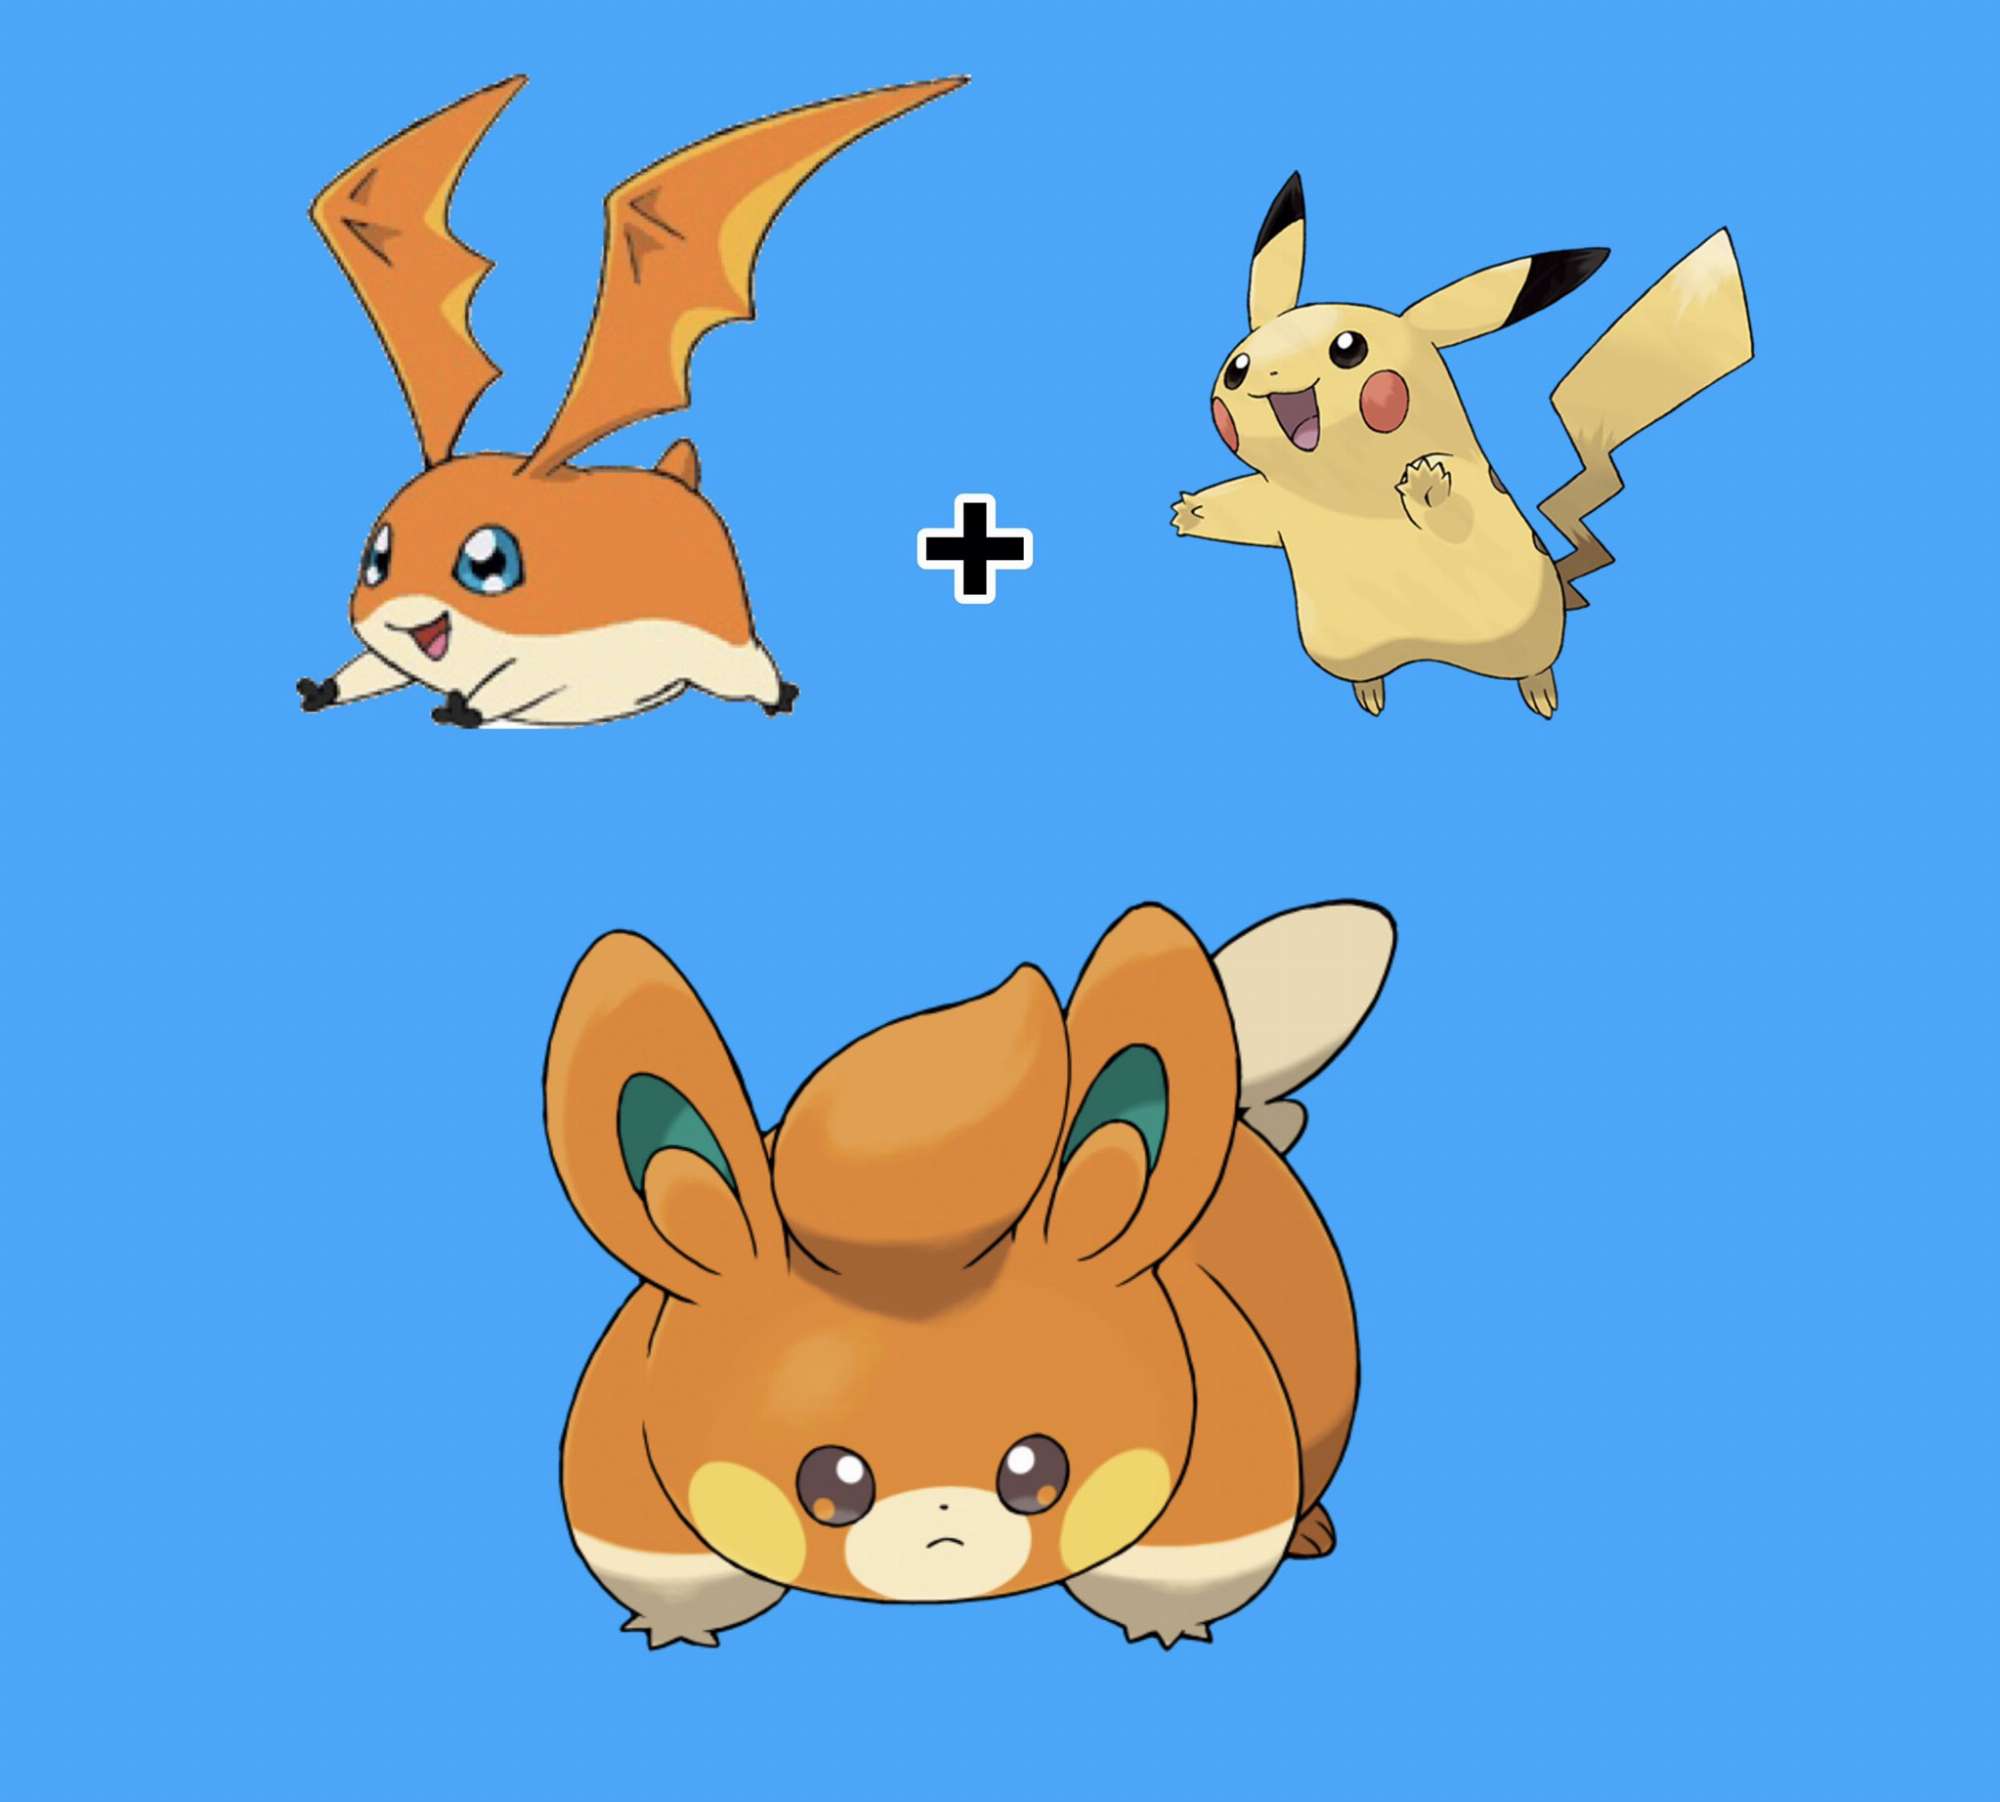 Thiết kế Pokémon 